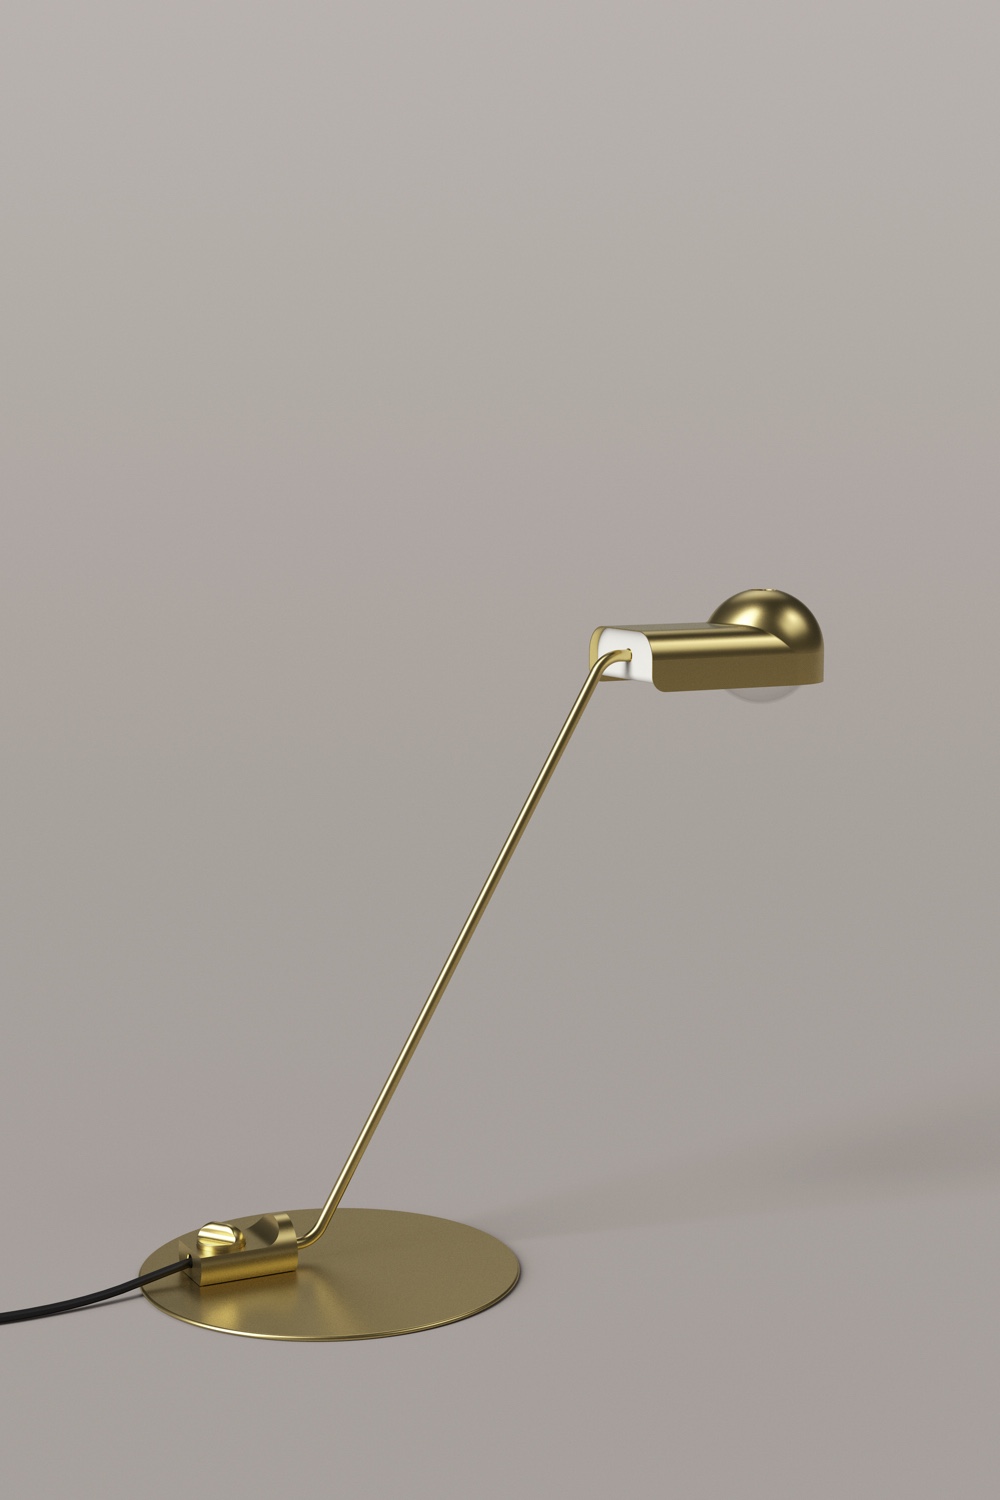 Domo Table Lamp by Joe Colombo.